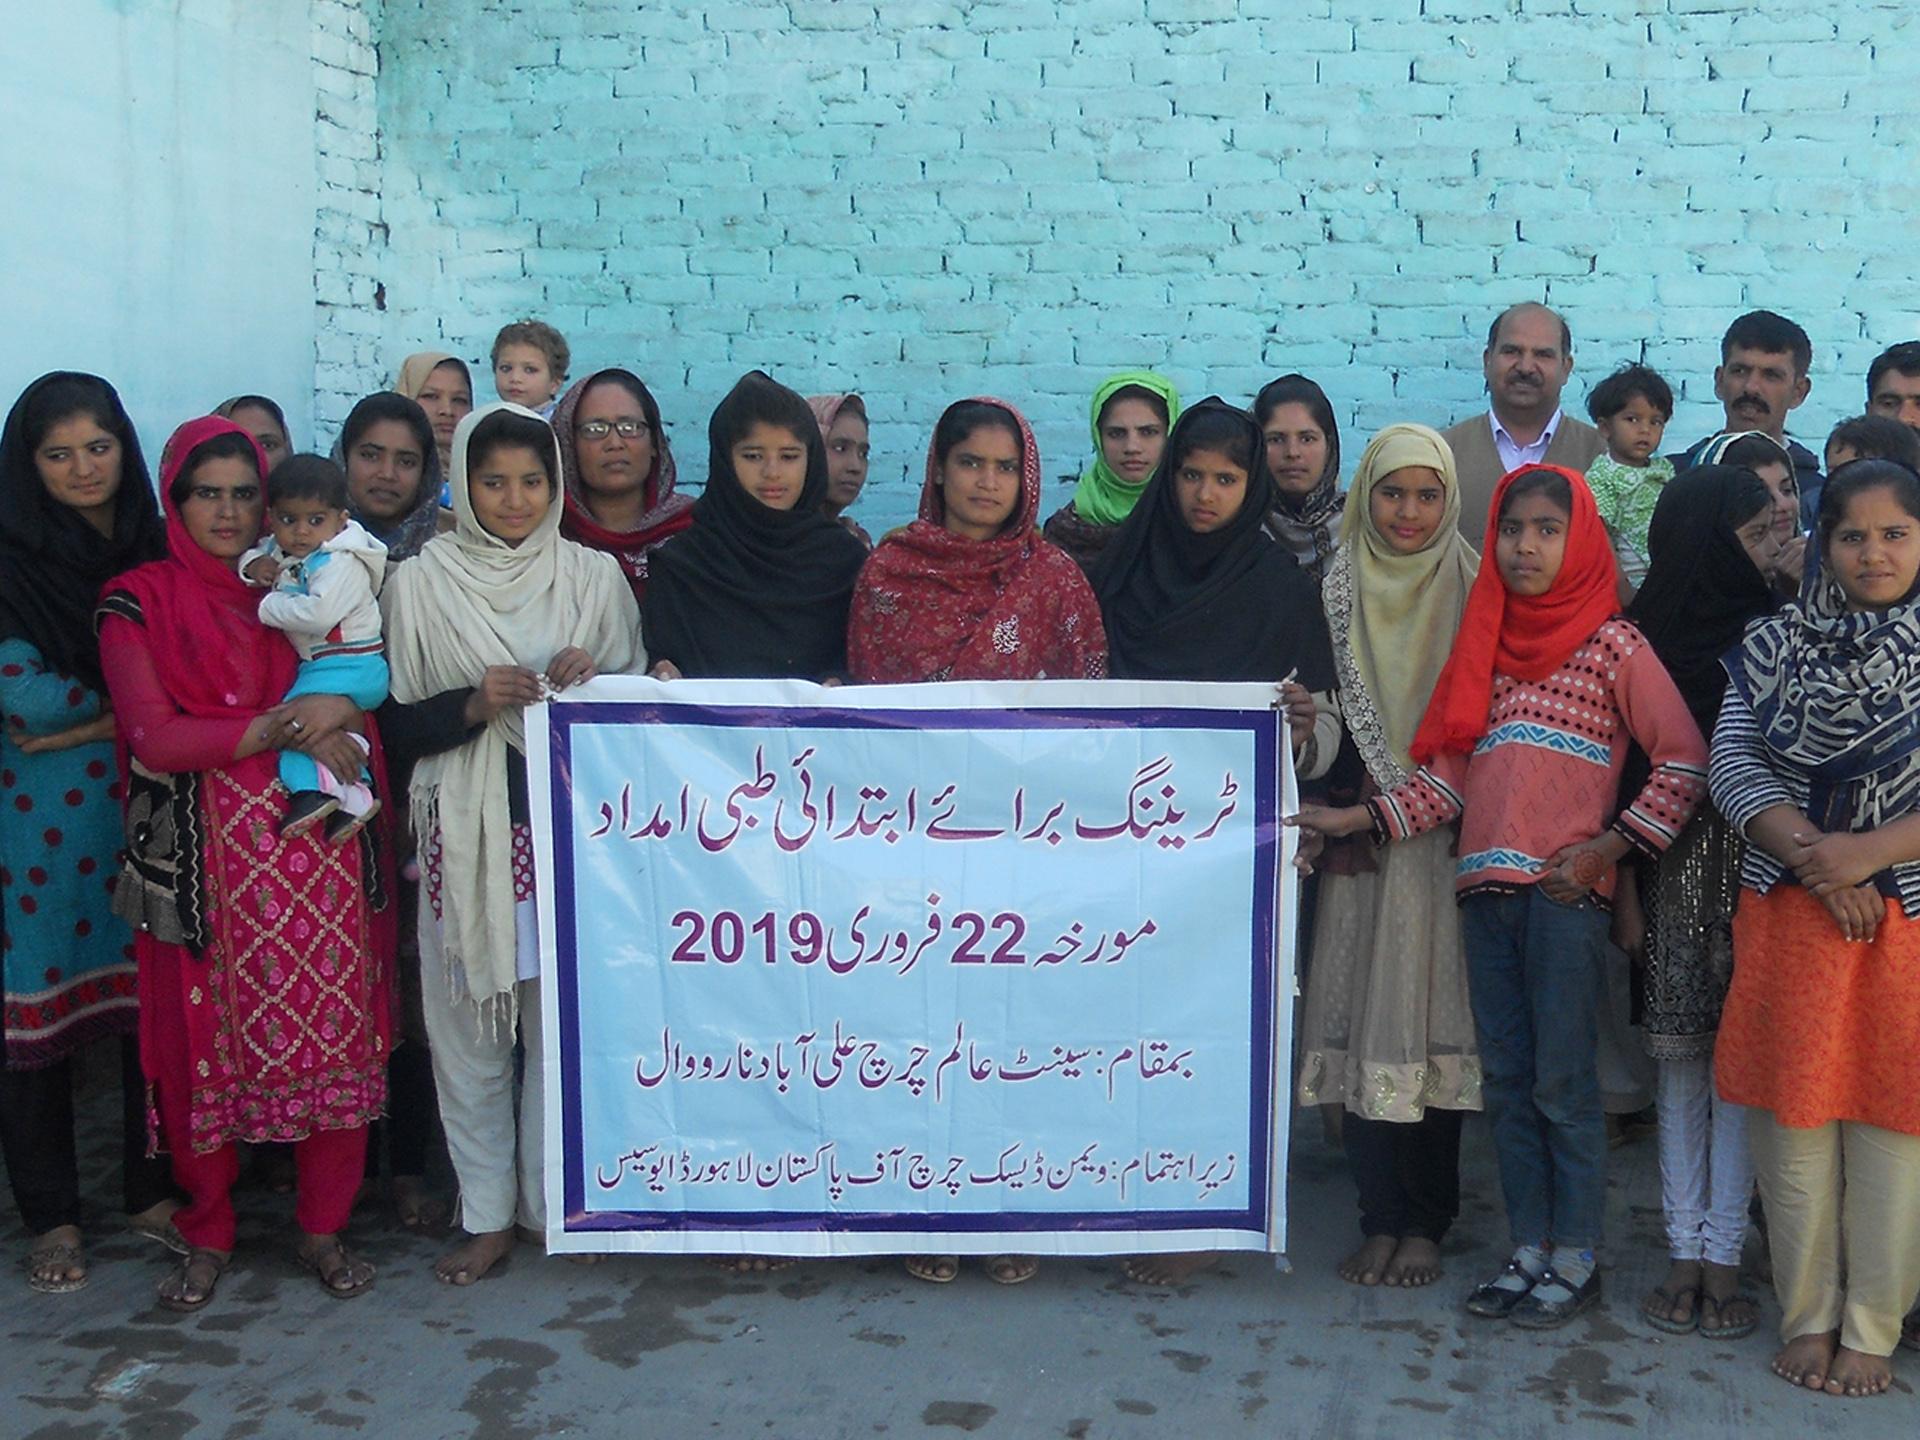 First Aid Training on 22 Feb, 19 at Alliabad Village Narrowal